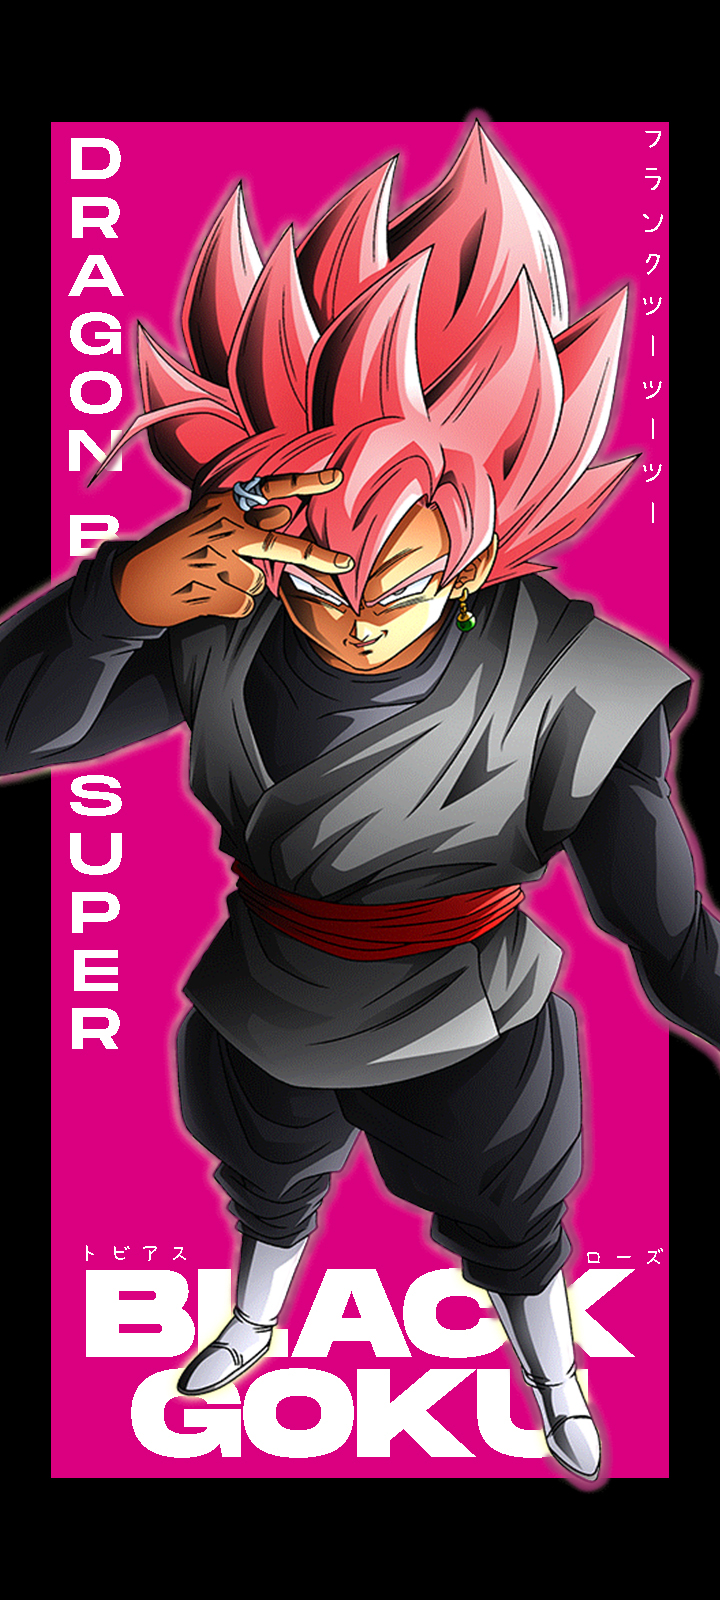 Fondo de pantalla / Black Goku Rose / 720 x 1600 by Armessss on DeviantArt